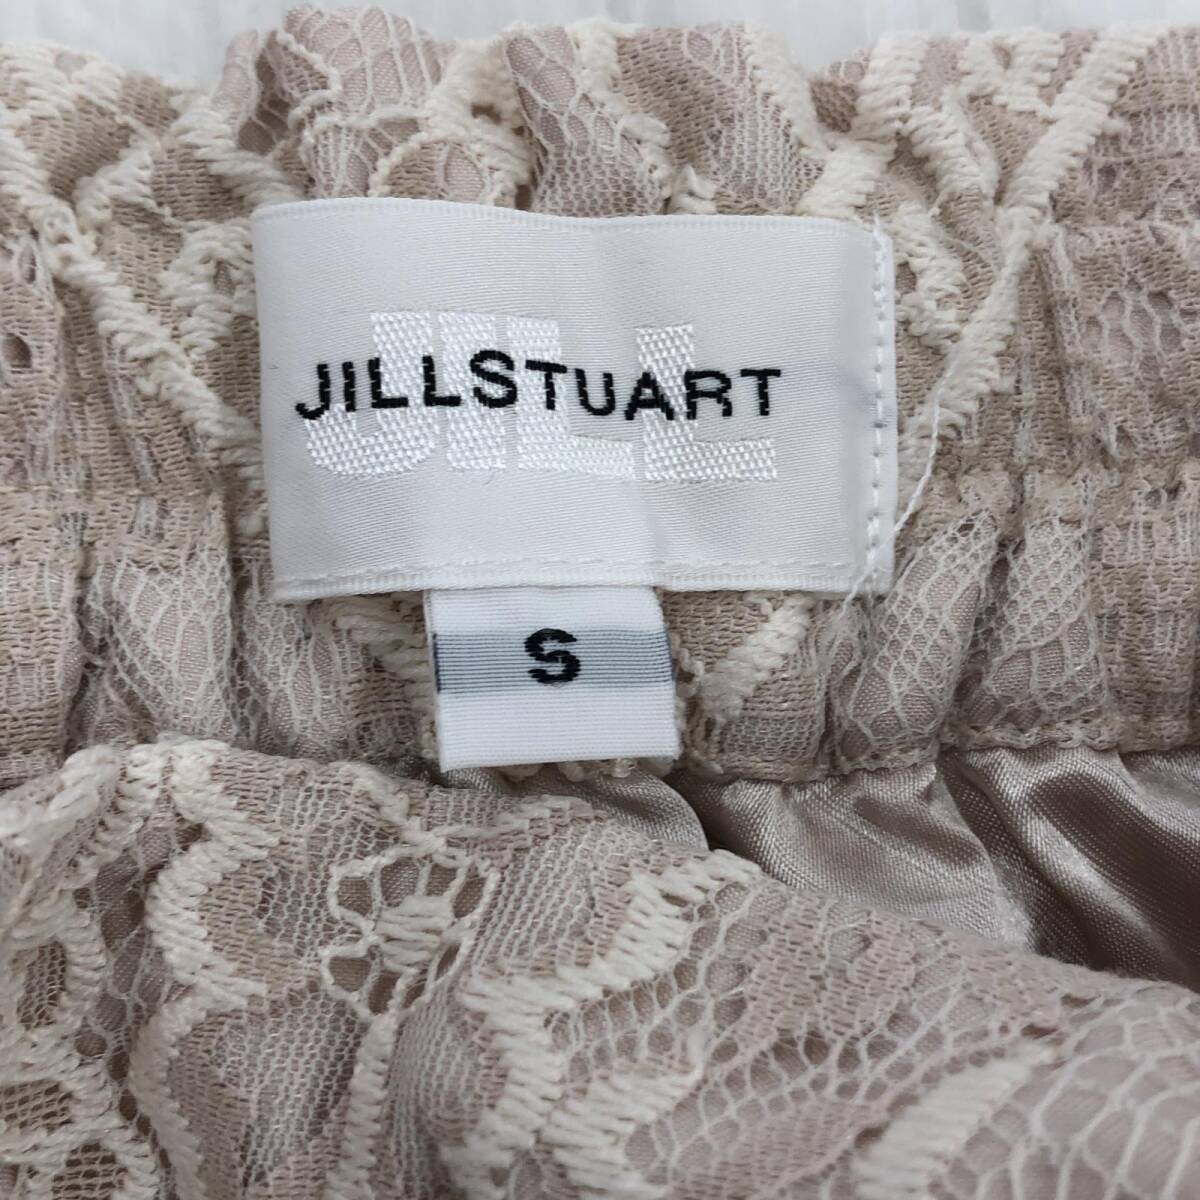 yu. пачка OK JILLSTUART Jill Stuart гонки юбка sizeS/ бежевый женский 